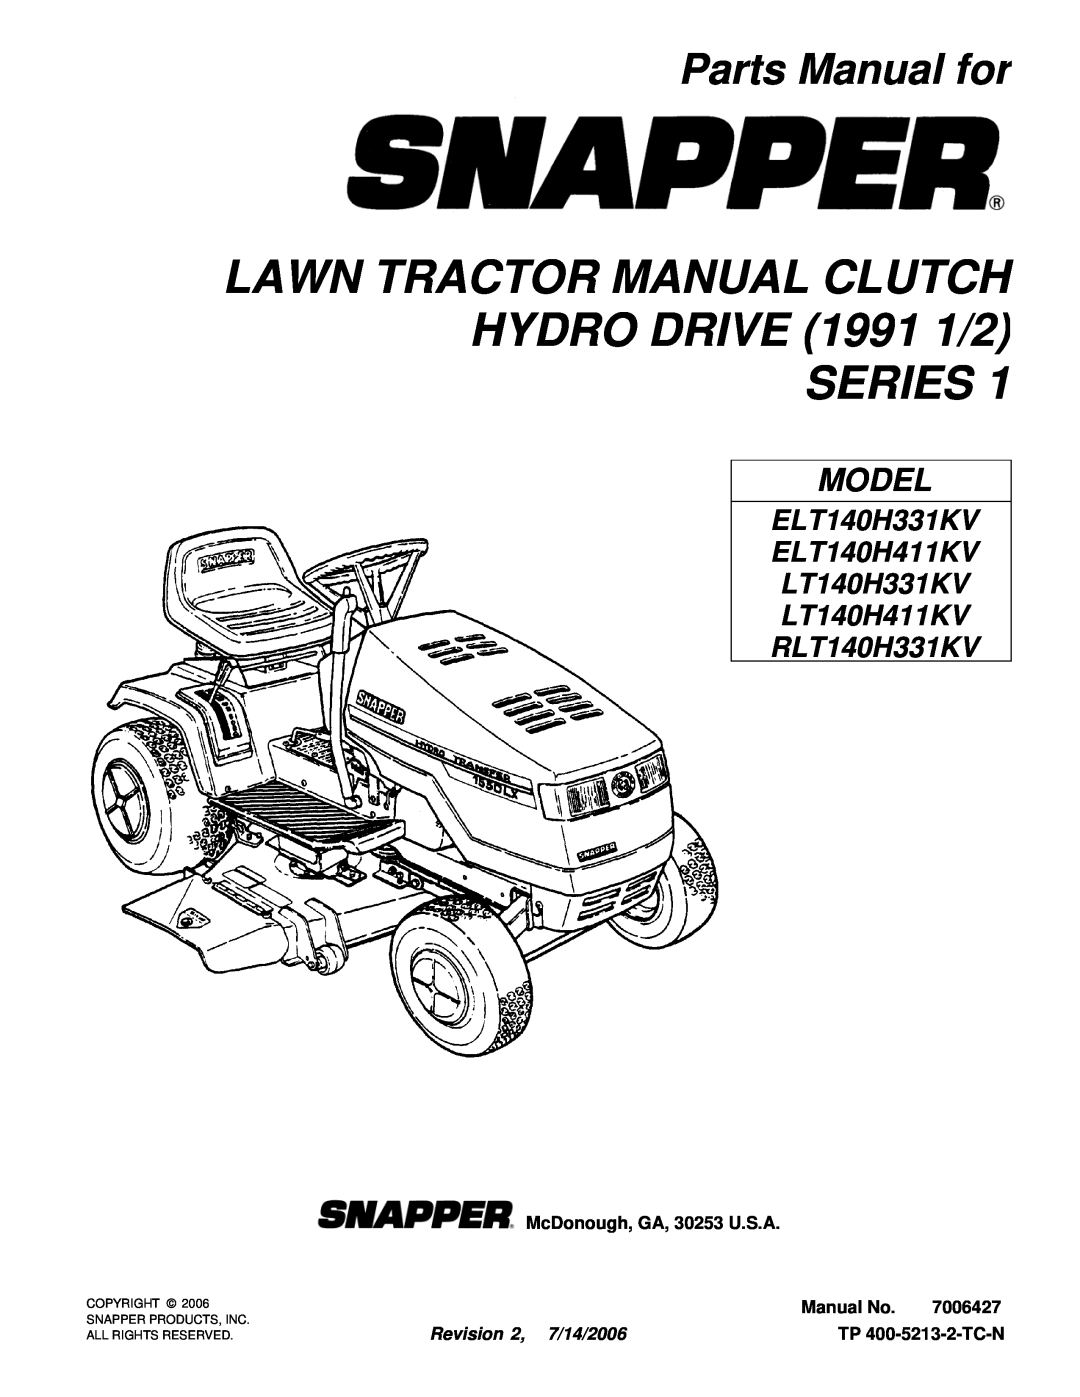 Snapper ELT140H331KV manual LAWN TRACTOR MANUAL CLUTCH HYDRO DRIVE 1991 1/2, Series, Parts Manual for, Model, RLT140H331KV 